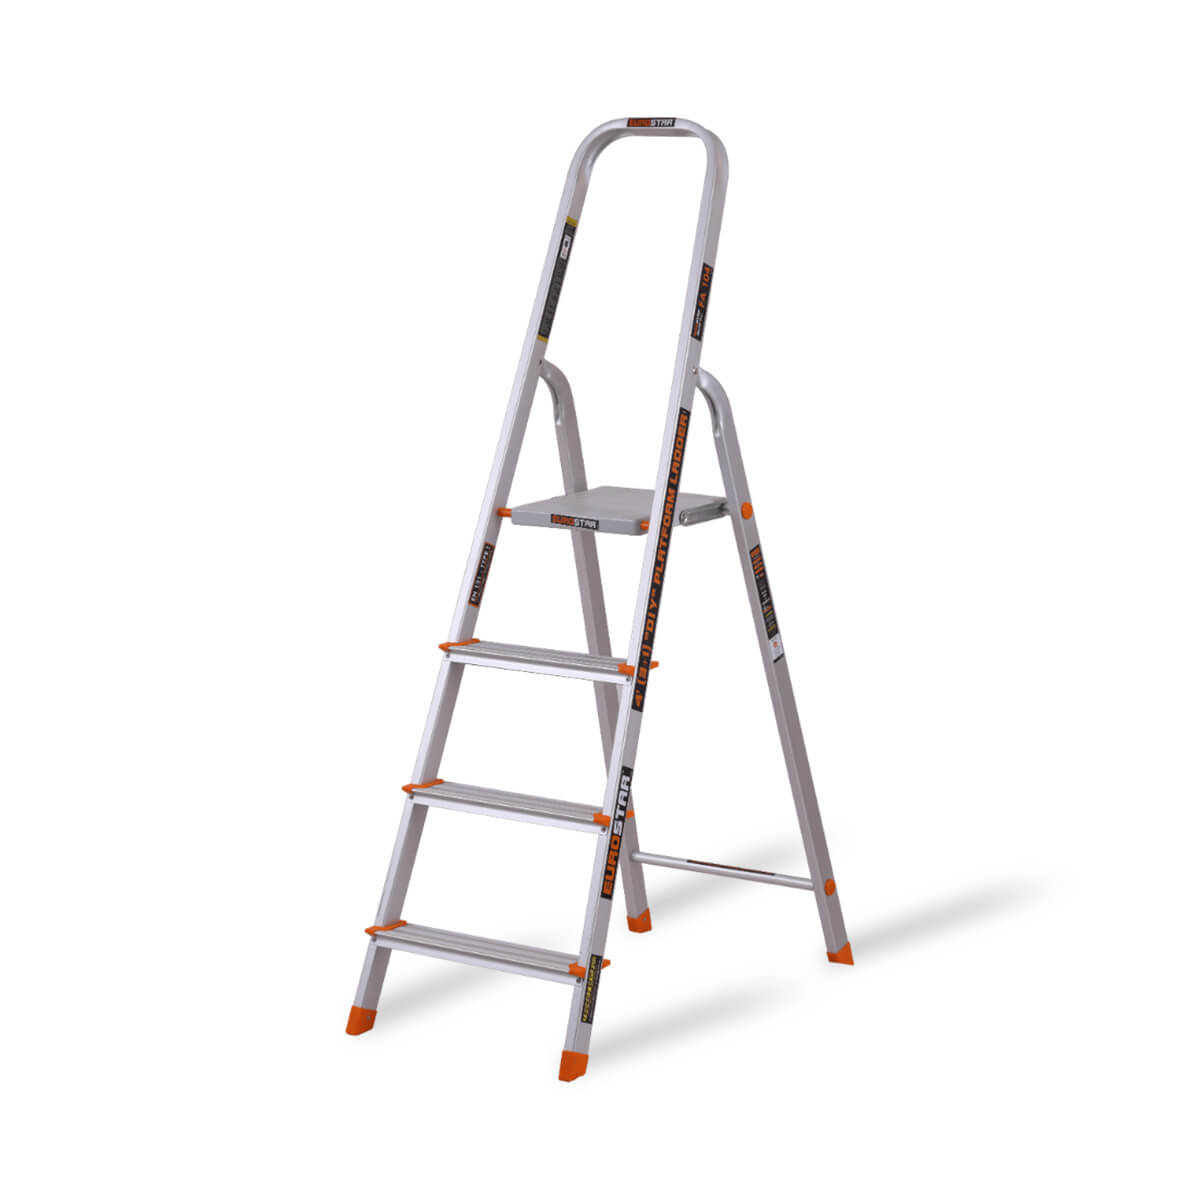 eurostar-step-ladders-nexrise-india